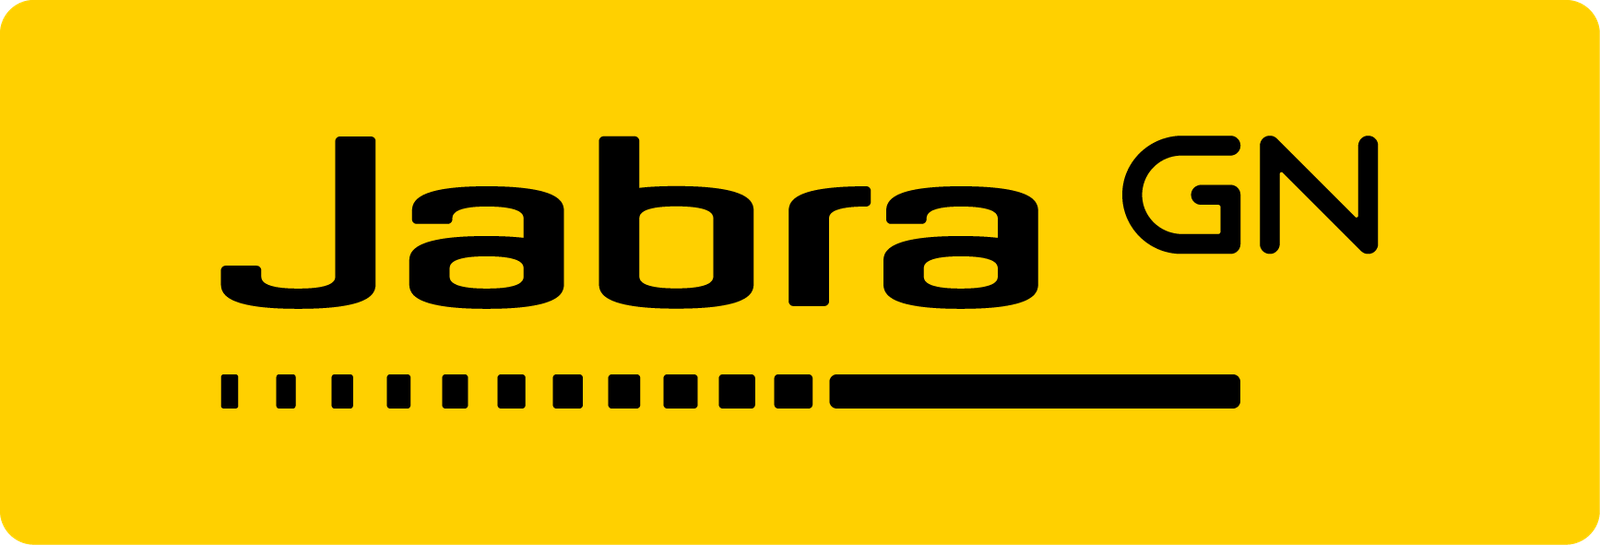 Jabra GN BrandMark RGB 150ppi ArdorComm Media Group New Normal – EDUCATION LEADERSHIP SUMMIT & AWARDS 2021